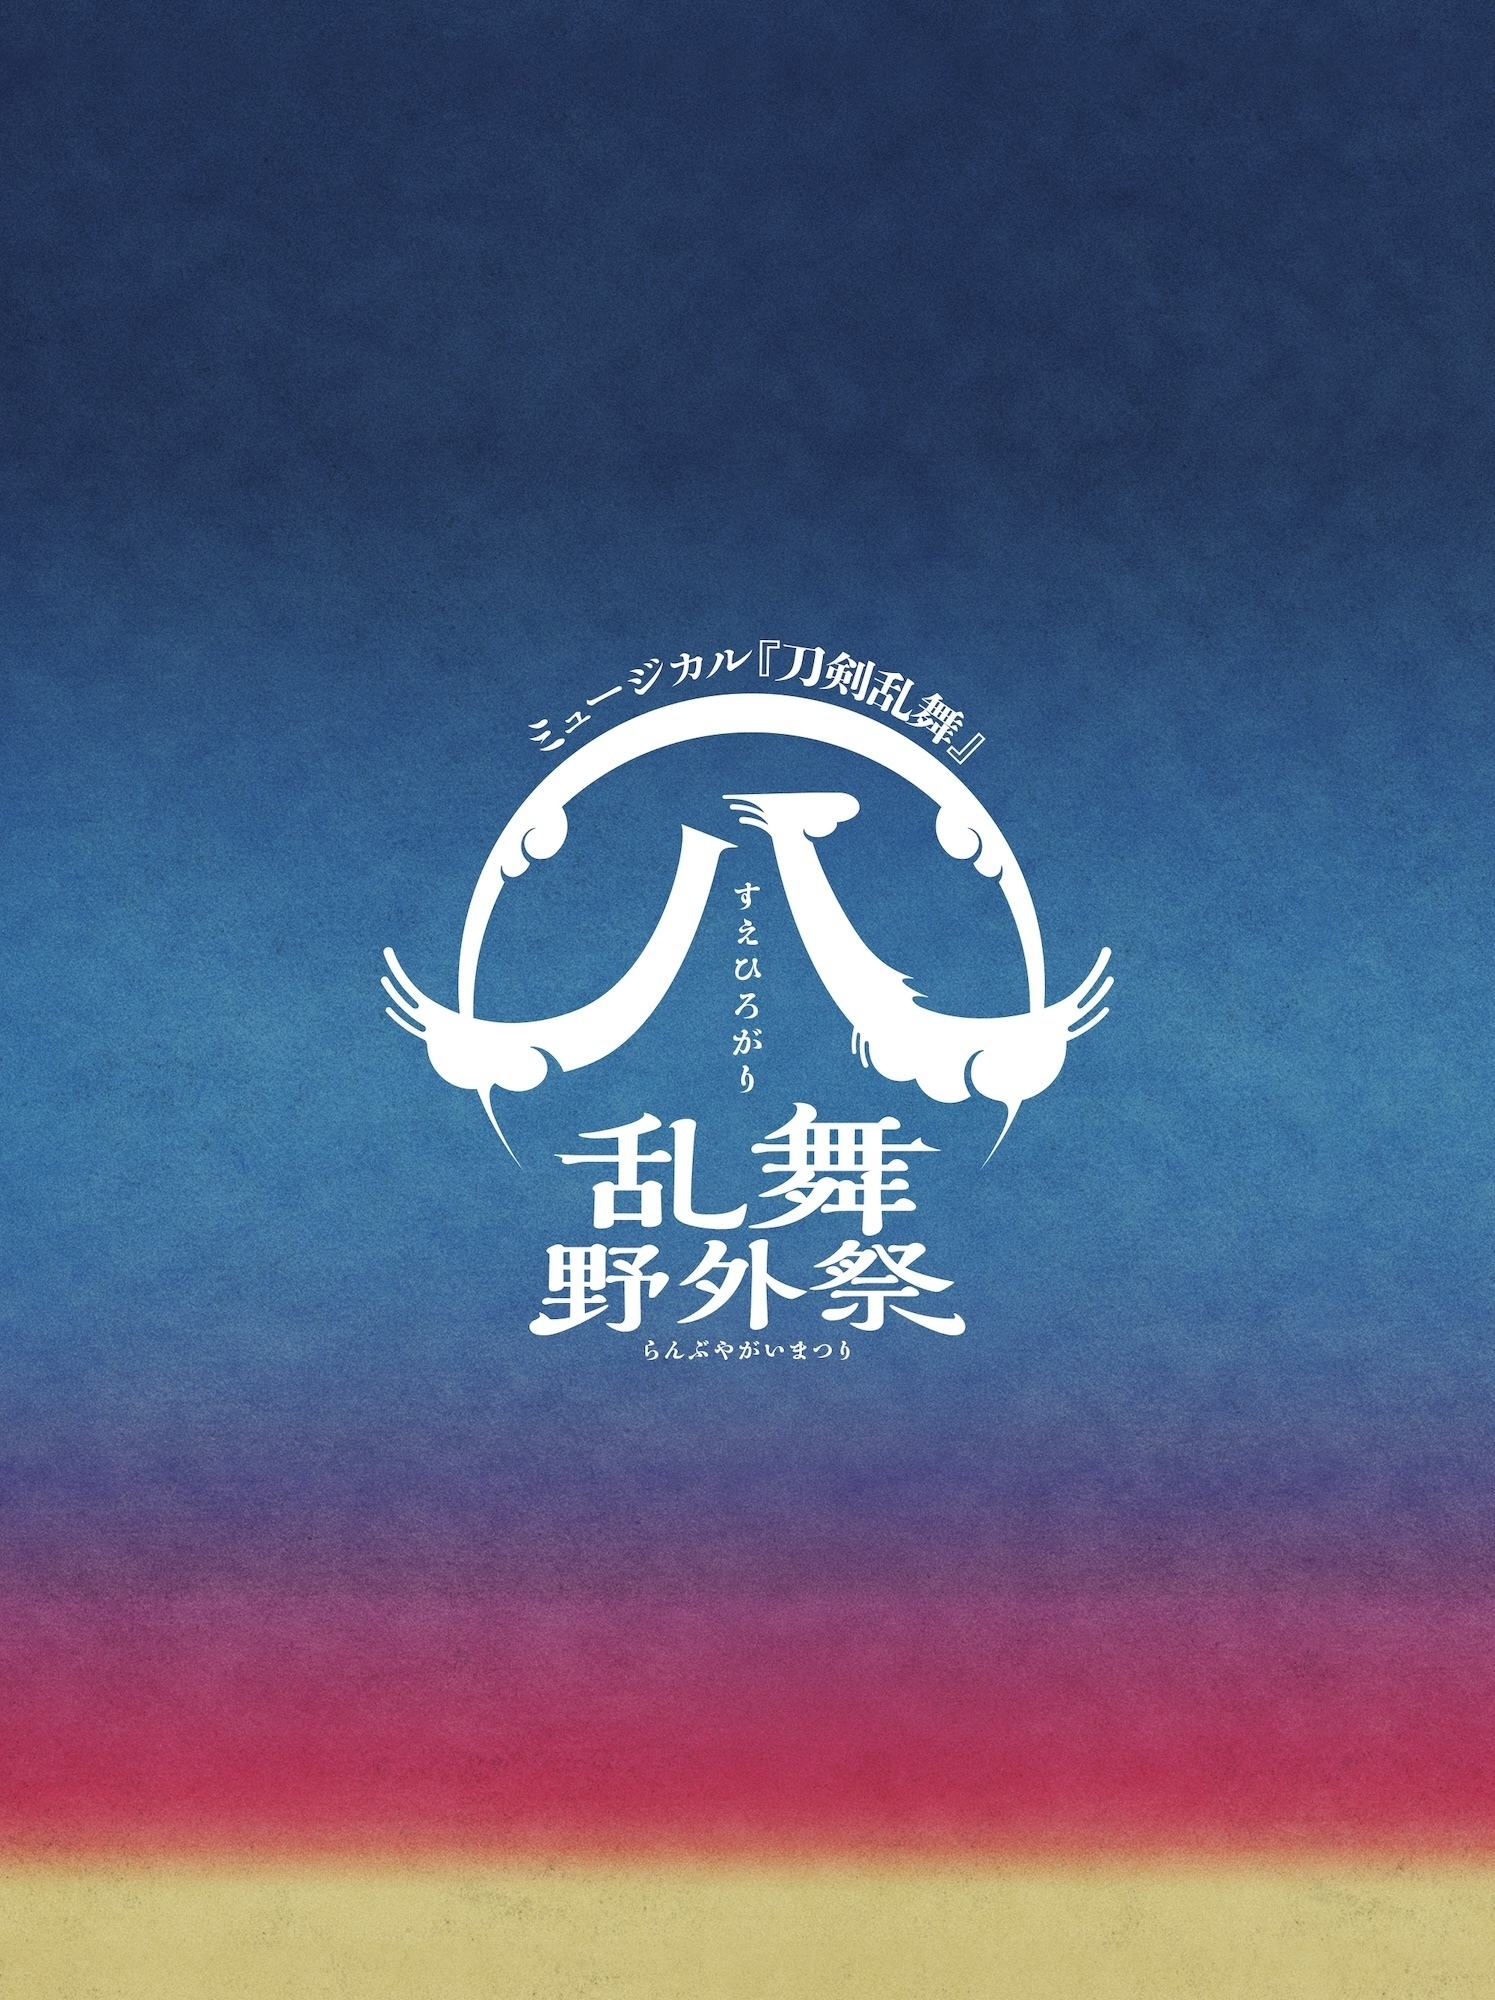 Blu-ray】ミュージカル『刀剣乱舞』 ㊇ 乱舞野外祭 初回限定盤 